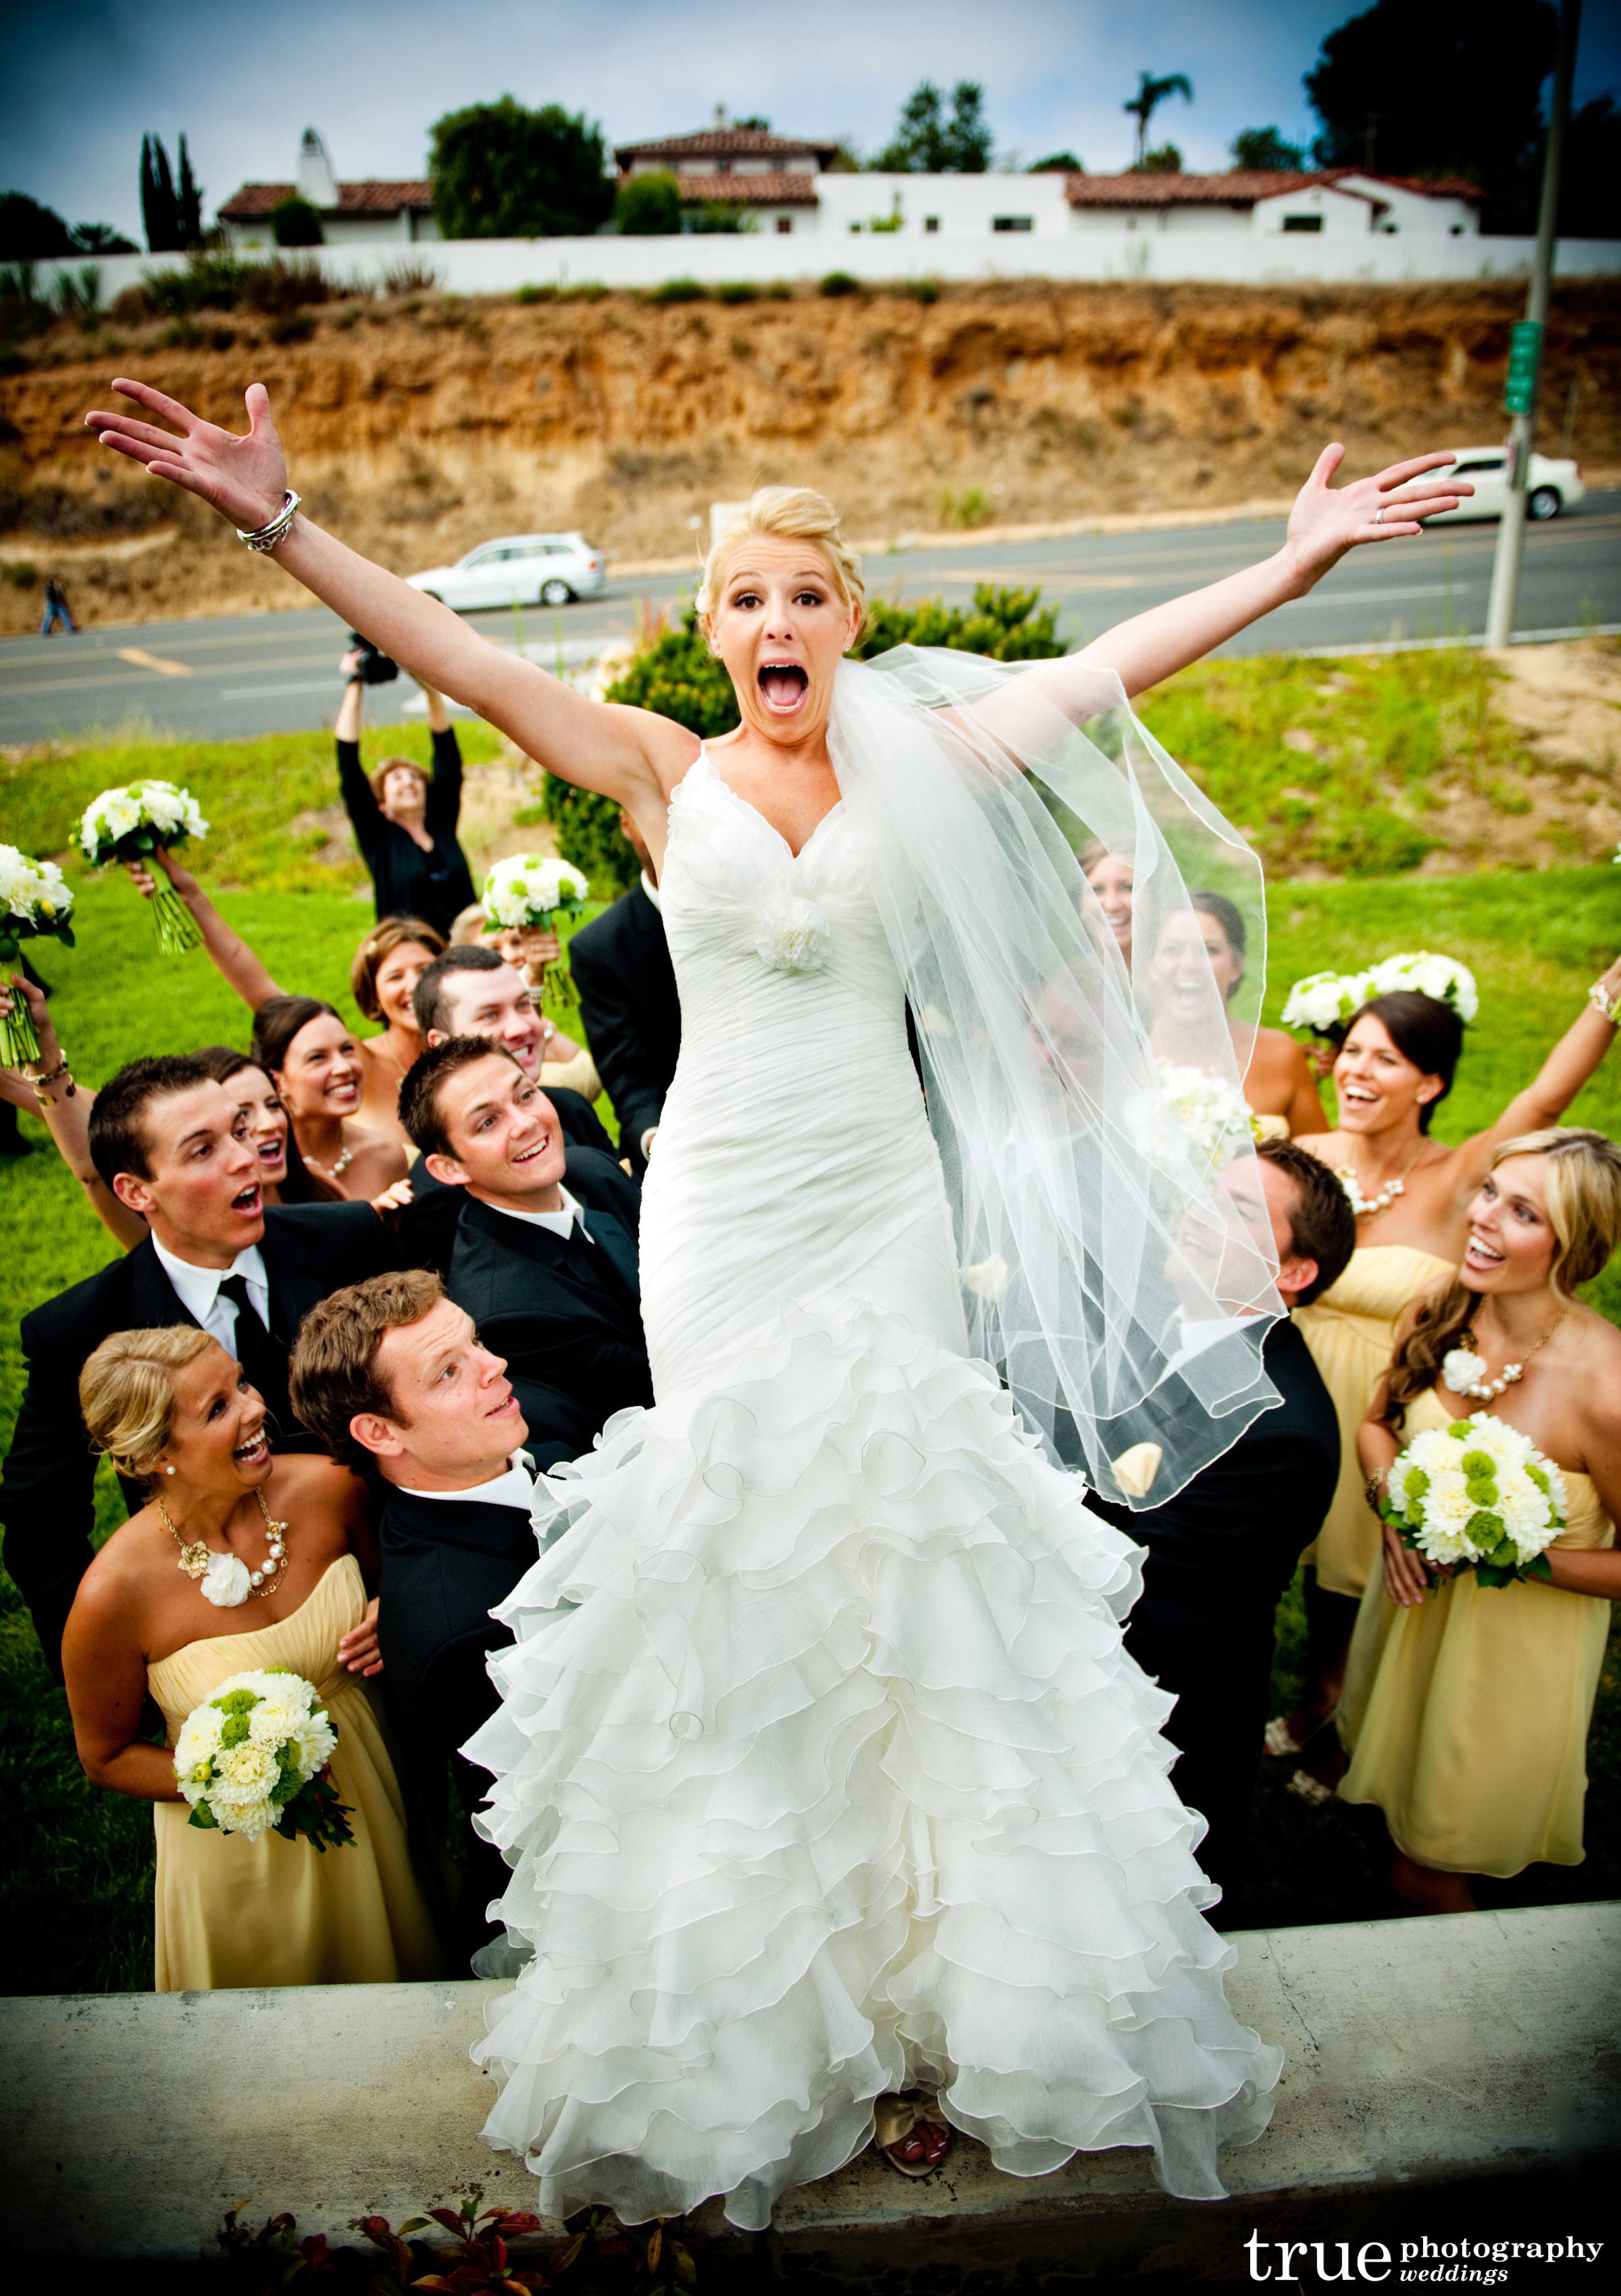 Bridesmaid Photos | Pictures of Groomsmen | Wedding Party Pics